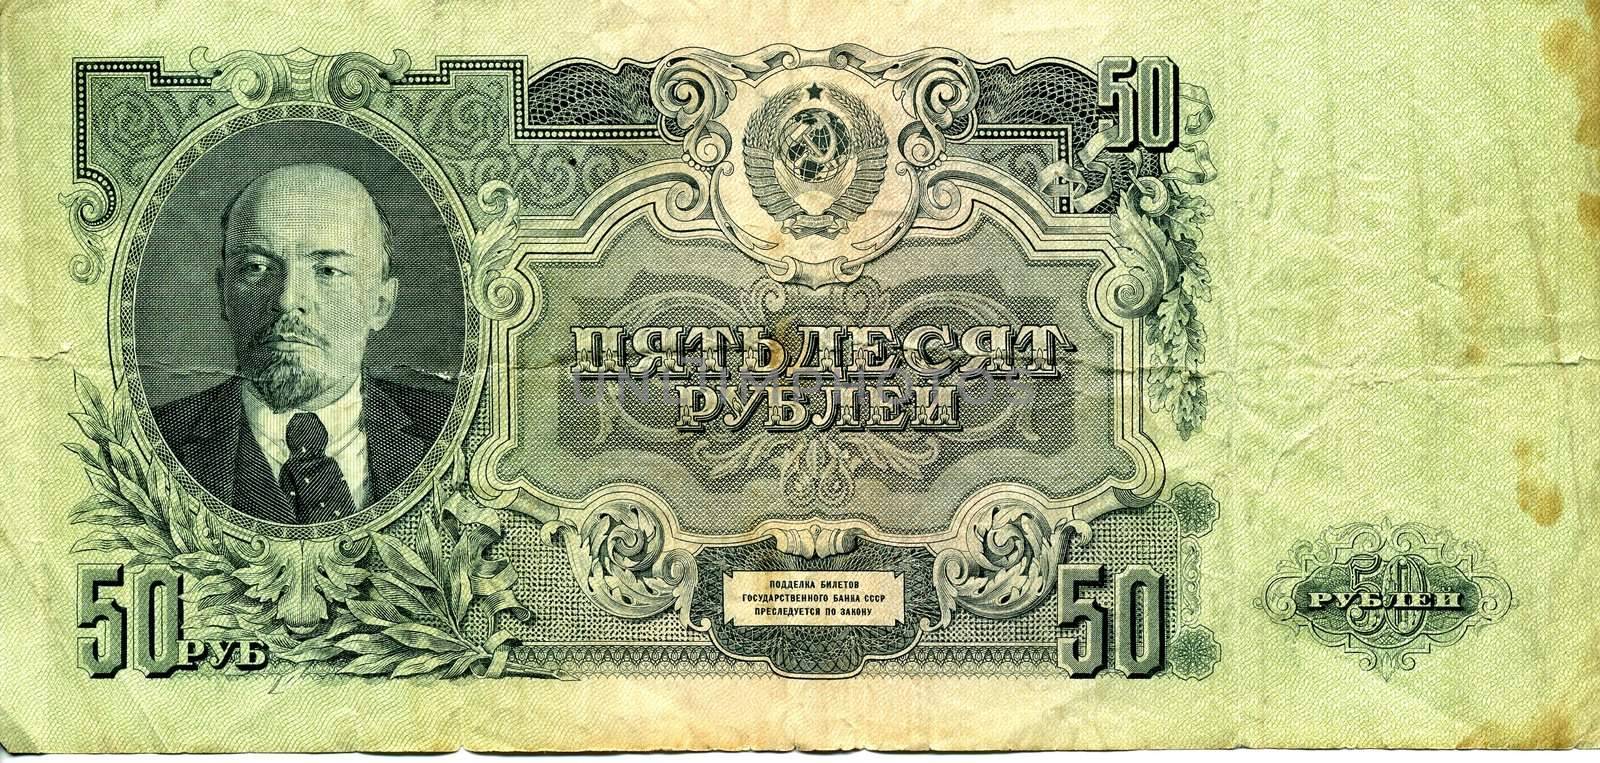 Vintage USSR 50 rubles with Lenin